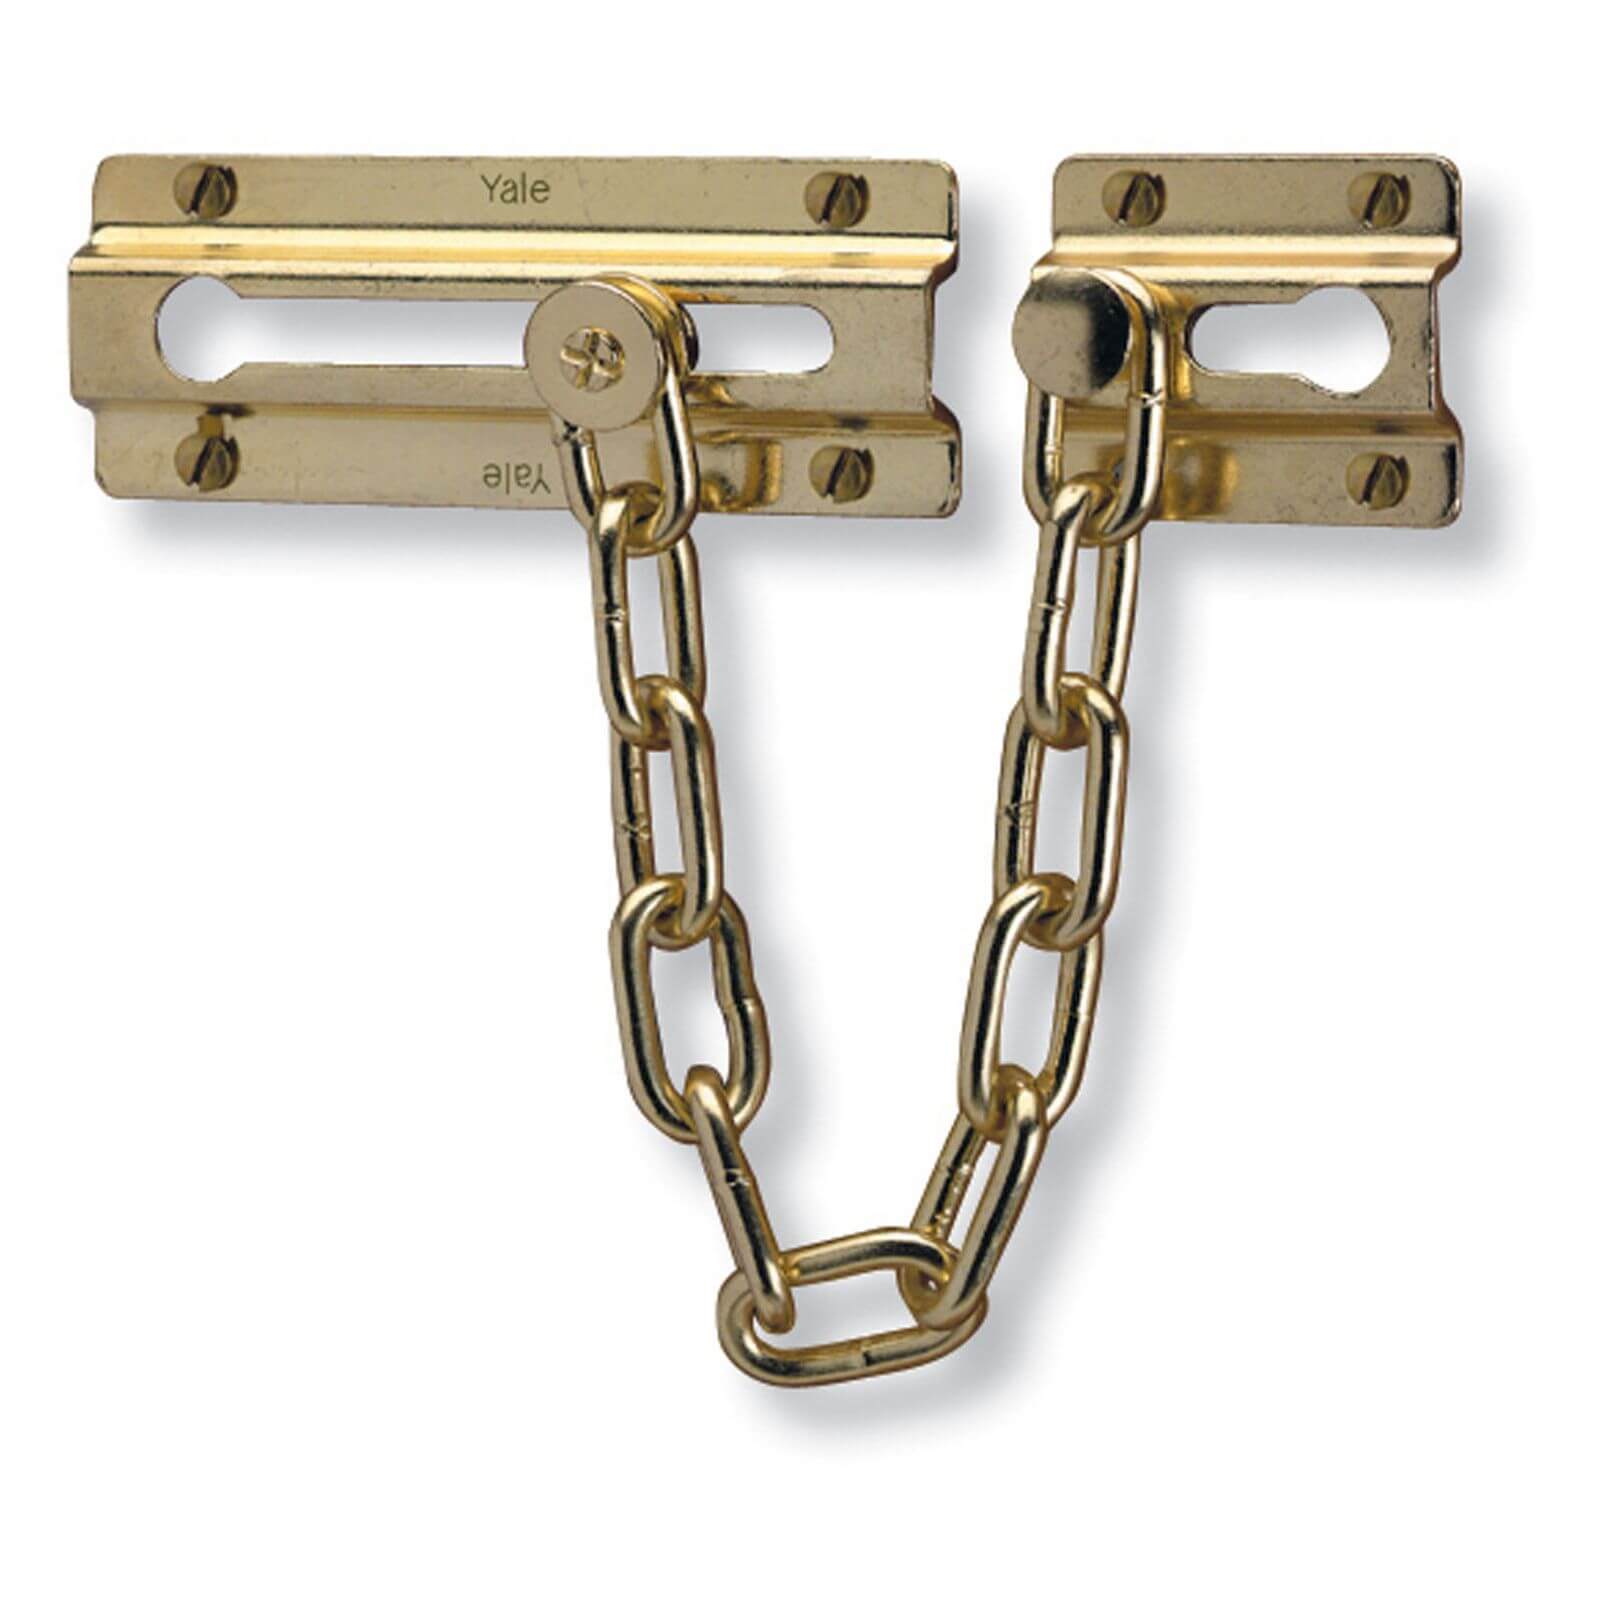 Yale Door Chain - Brass